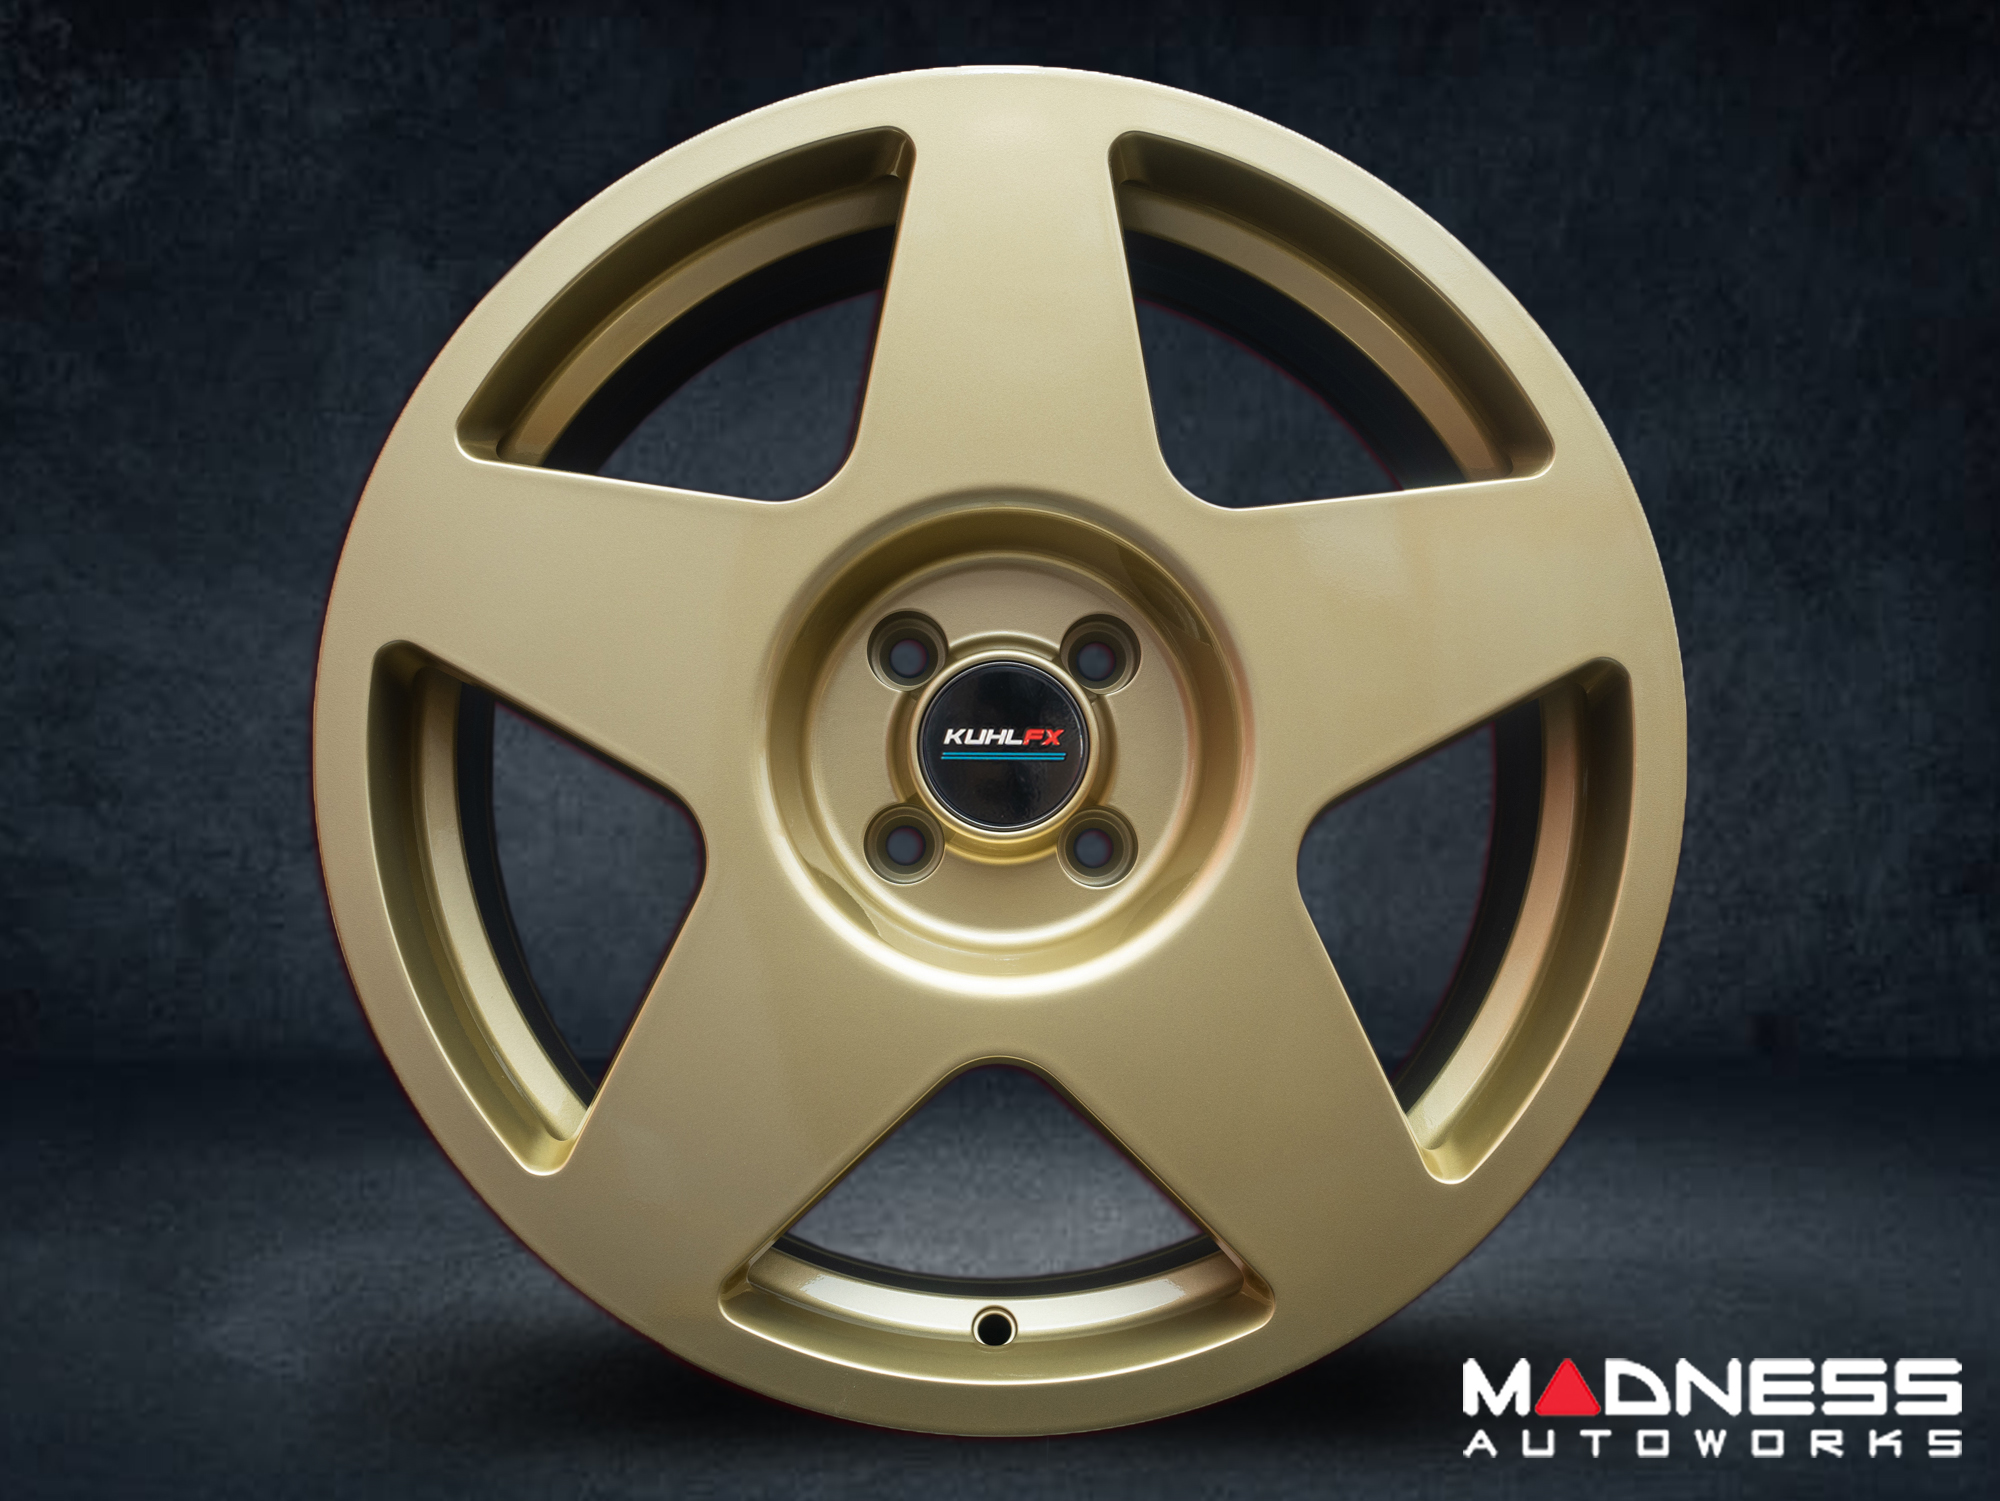 FIAT 500 Custom Wheels - KUHLFX - Pista - Gloss Gold - Set of 4 - 17"